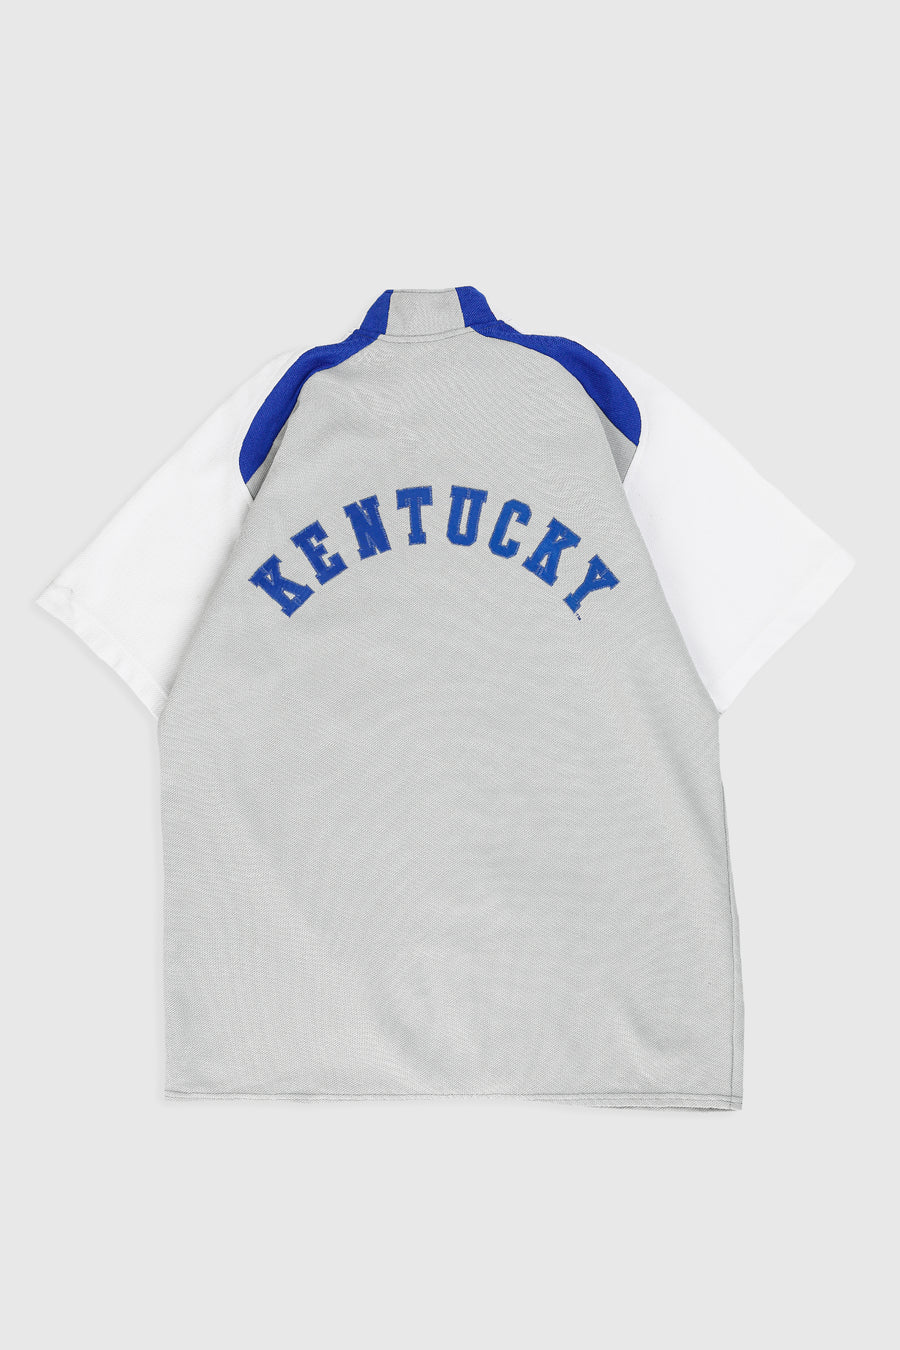 Vintage Nike Kentucky Tearaway Shirt - L